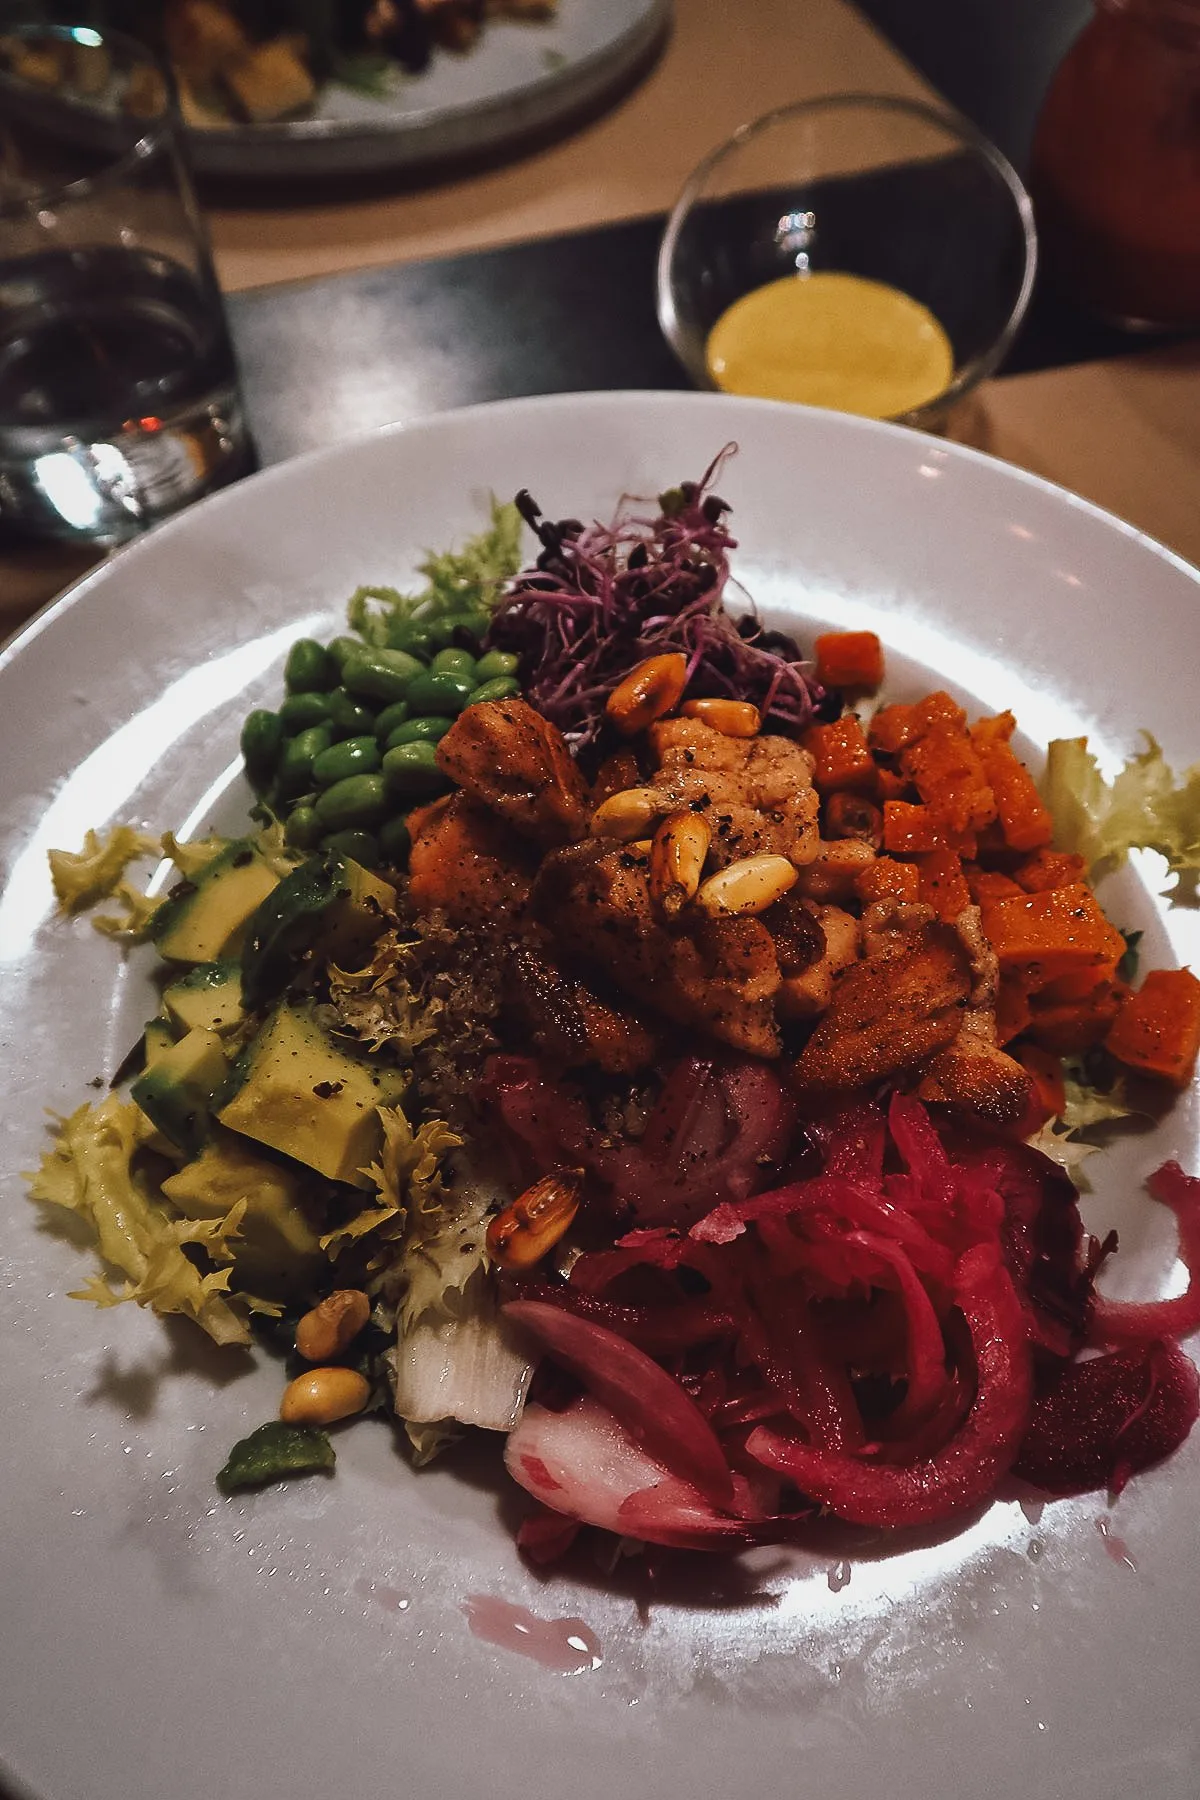 Salad at a restaurant in Barcelona